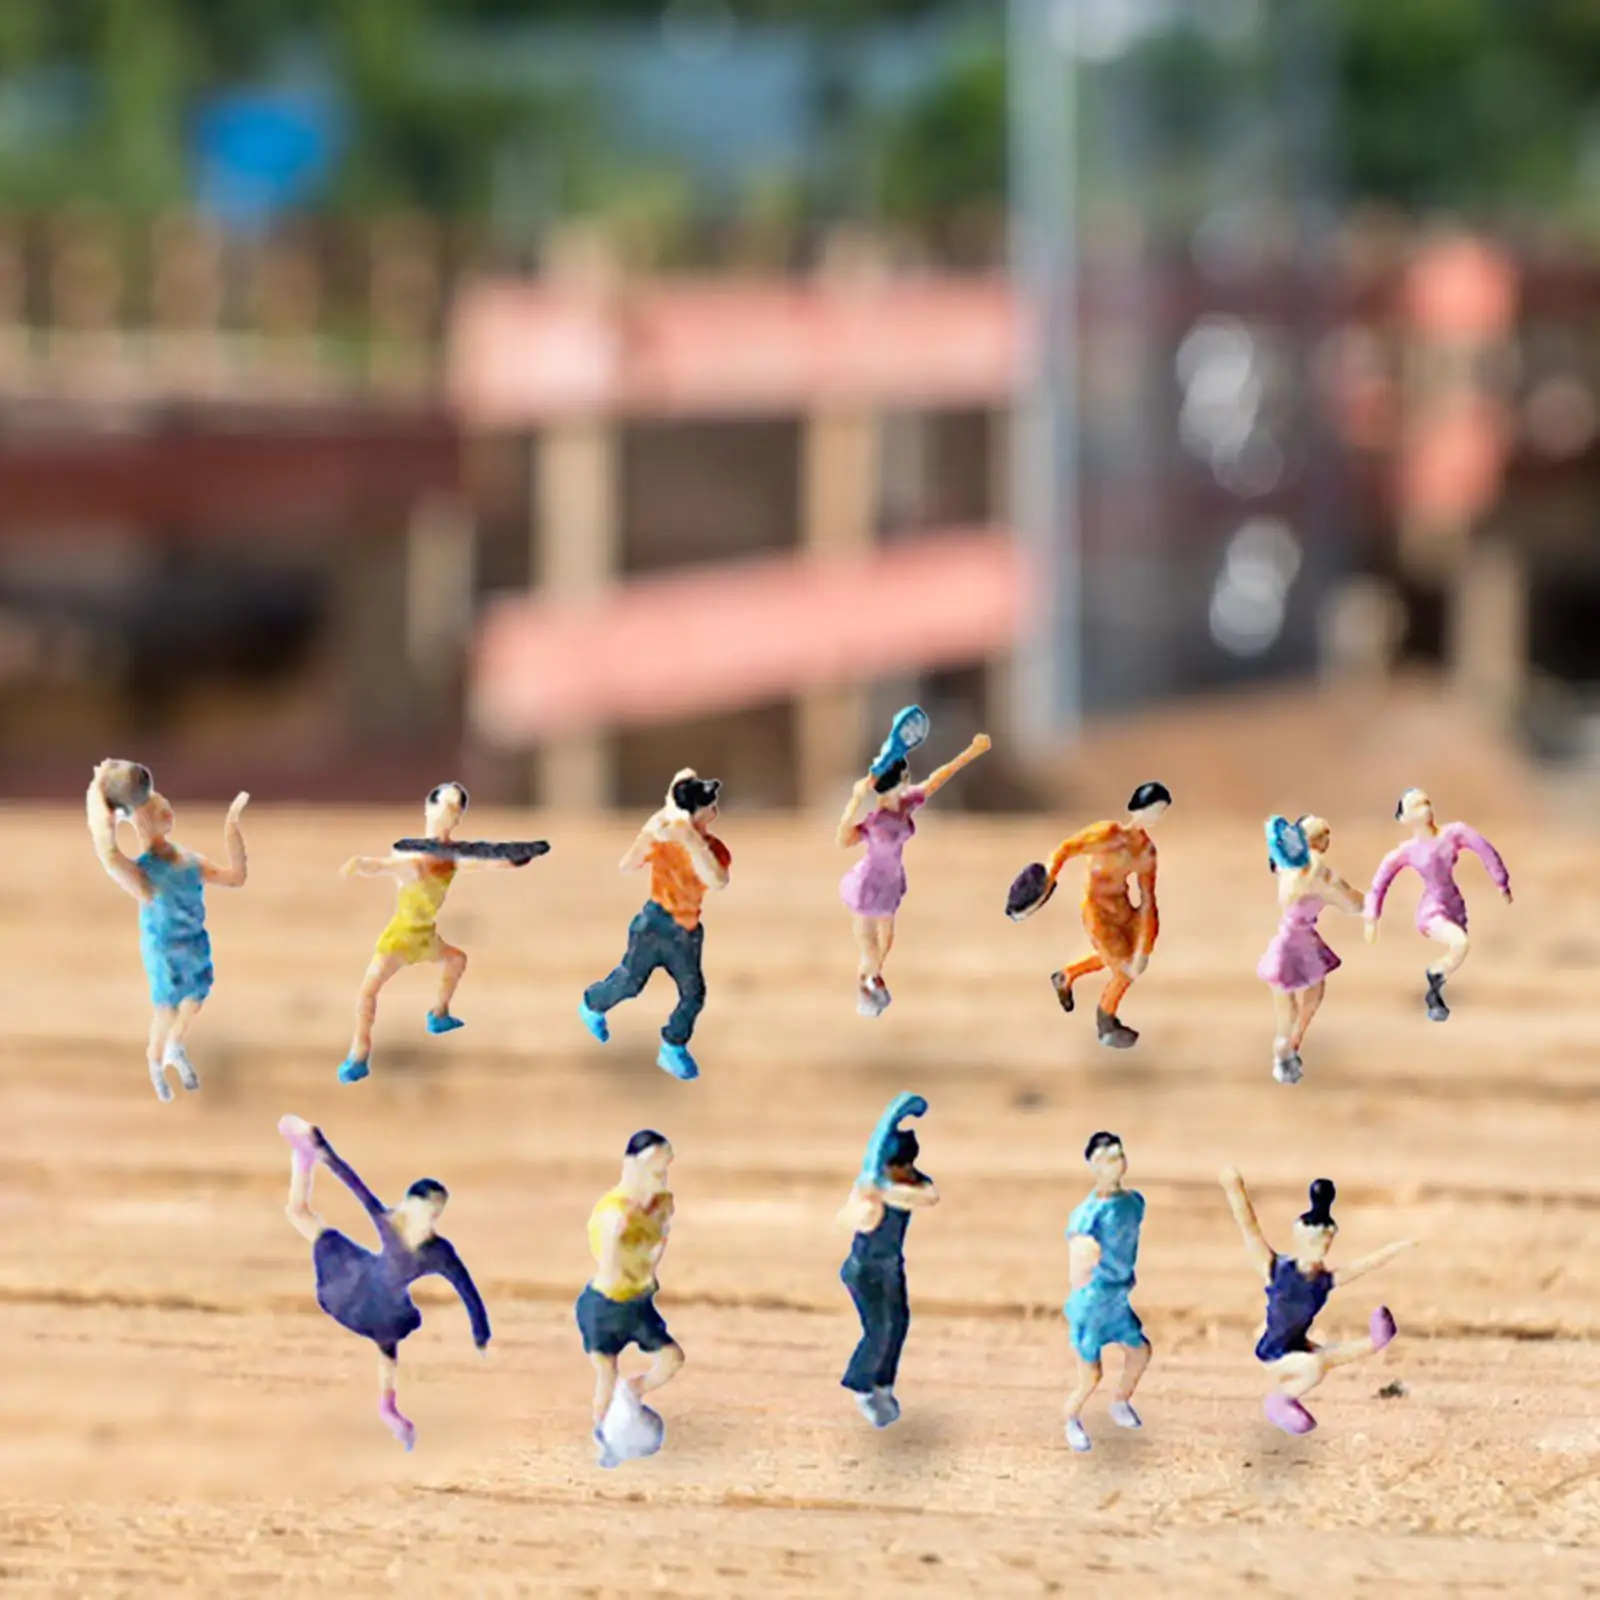 Miniature Model Figures Tiny People Mini Figurines Player Figure for DIY Scene Decor Diorama Layout Sand Table Layout Decoration